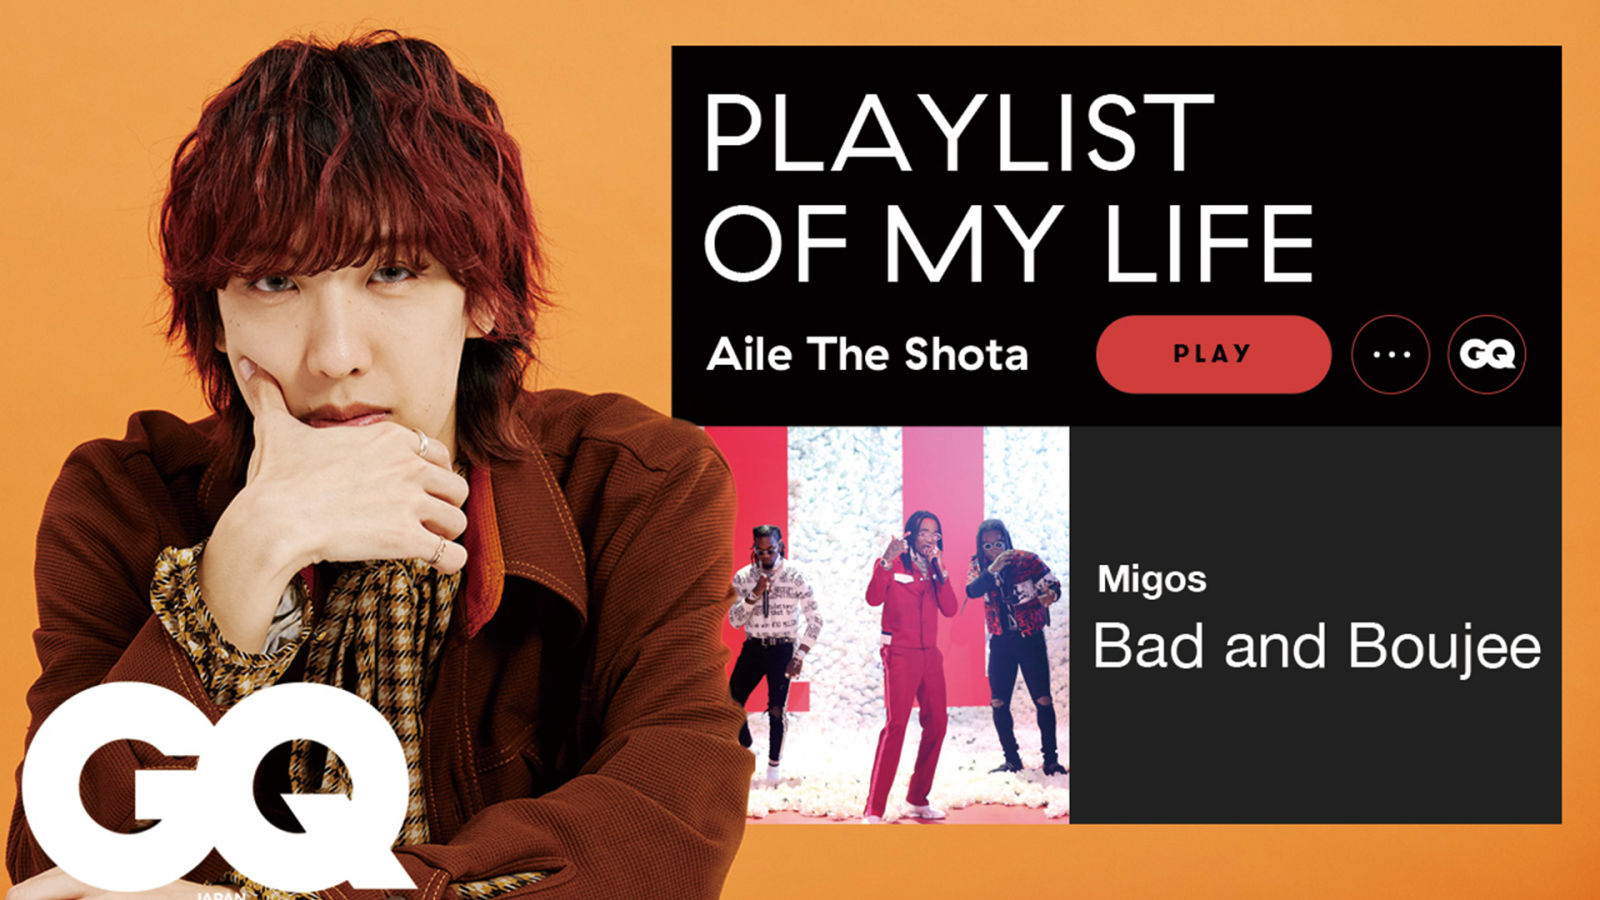 Aile The Shotaが自分の人生を支える大切な8曲を披露 | Playlist of My Life 